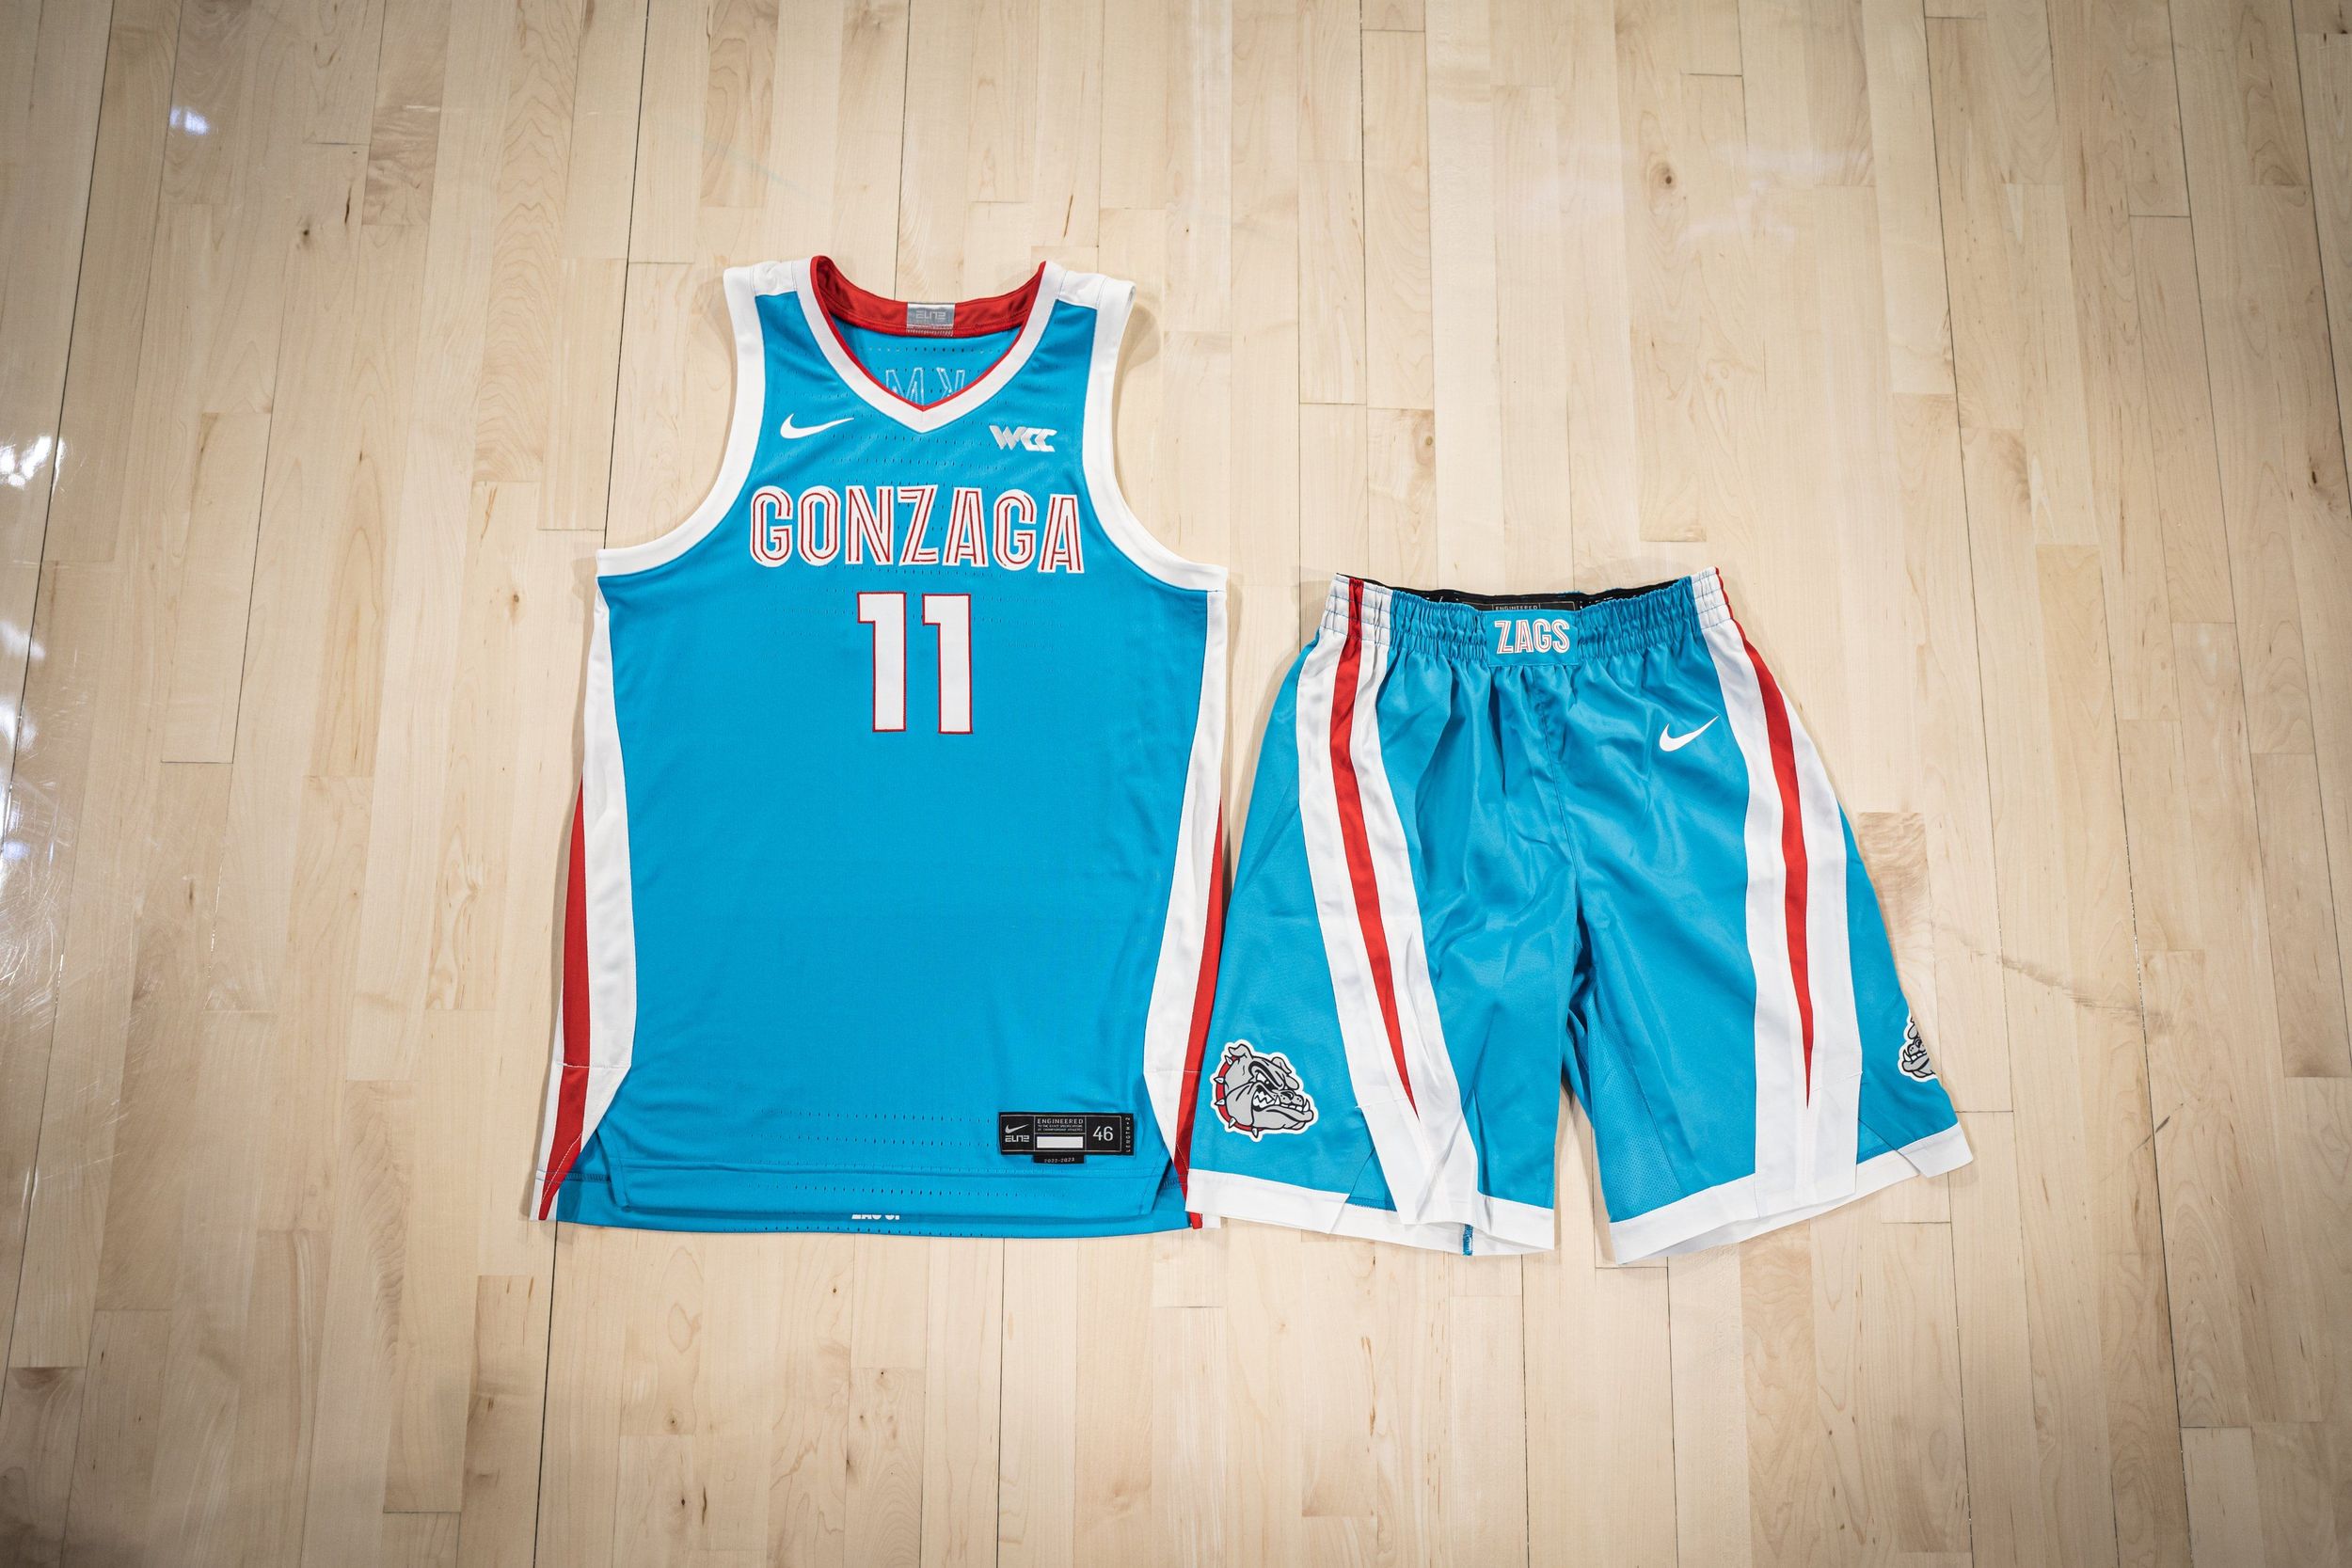 Nike N7 College Basketball Uniforms — UNISWAG